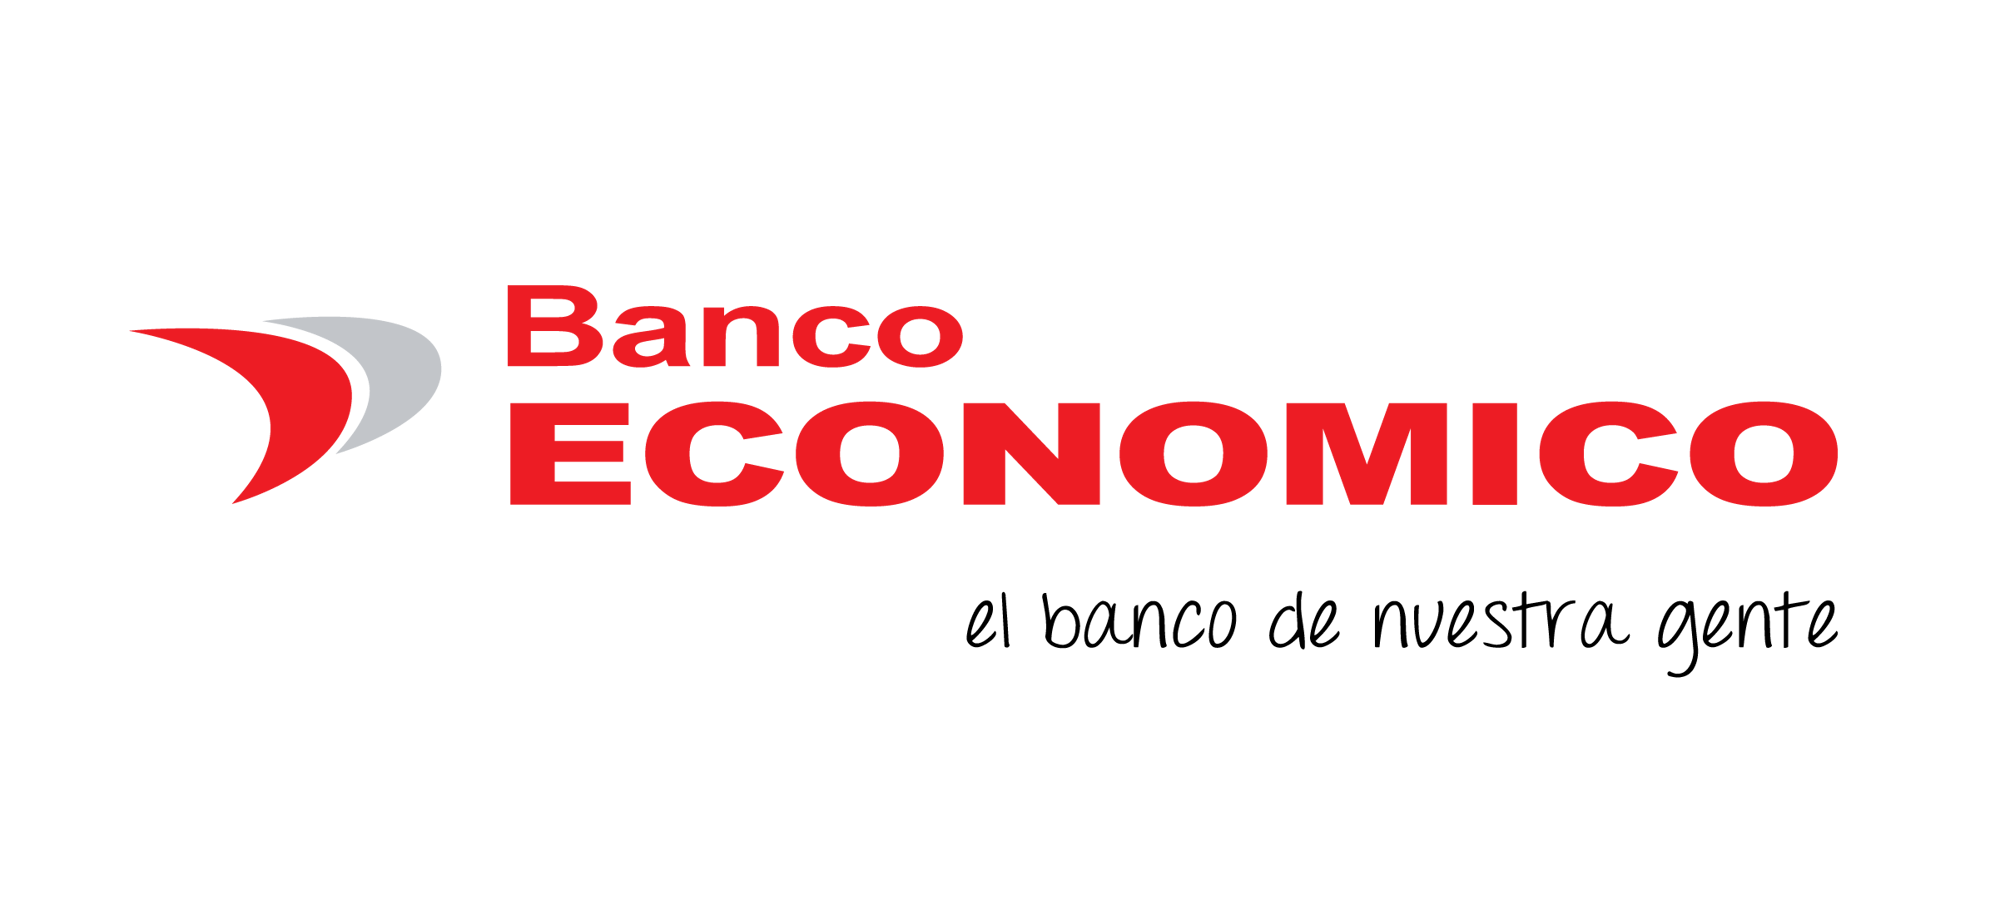 banco_economico-1